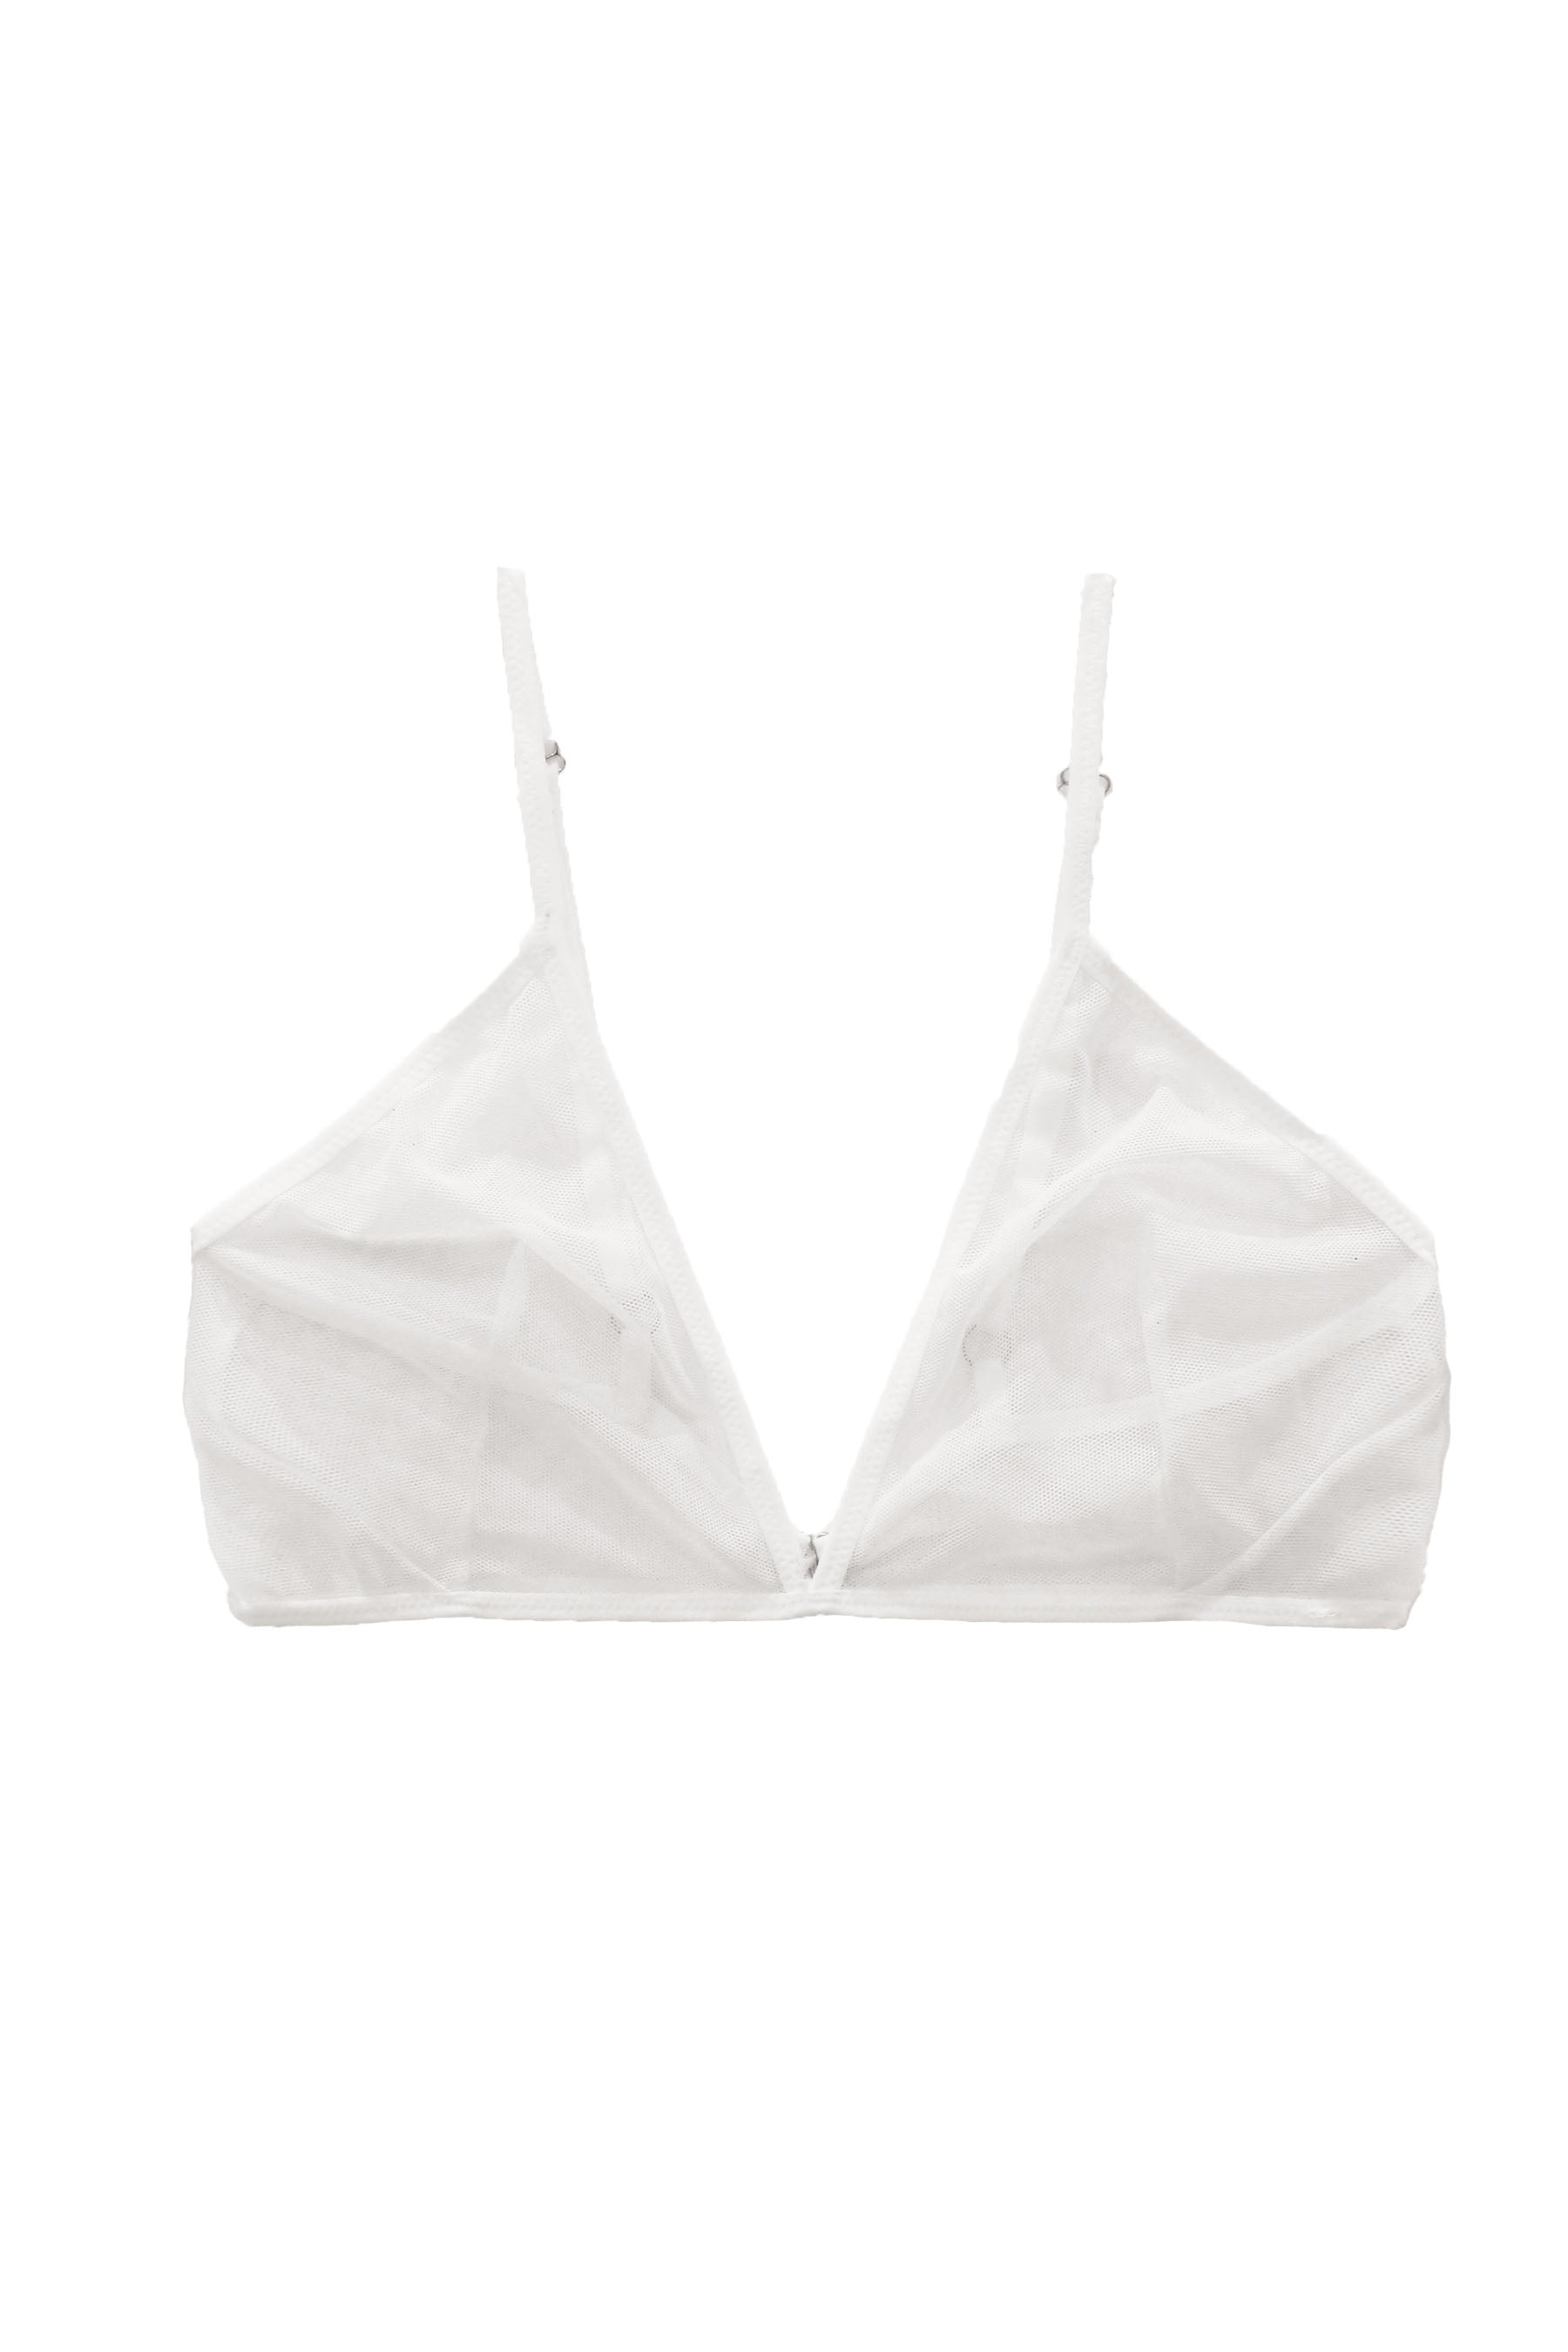 Bamboo Triangle Bra & Thong/Briefs Set - All White – Lounge Underwear